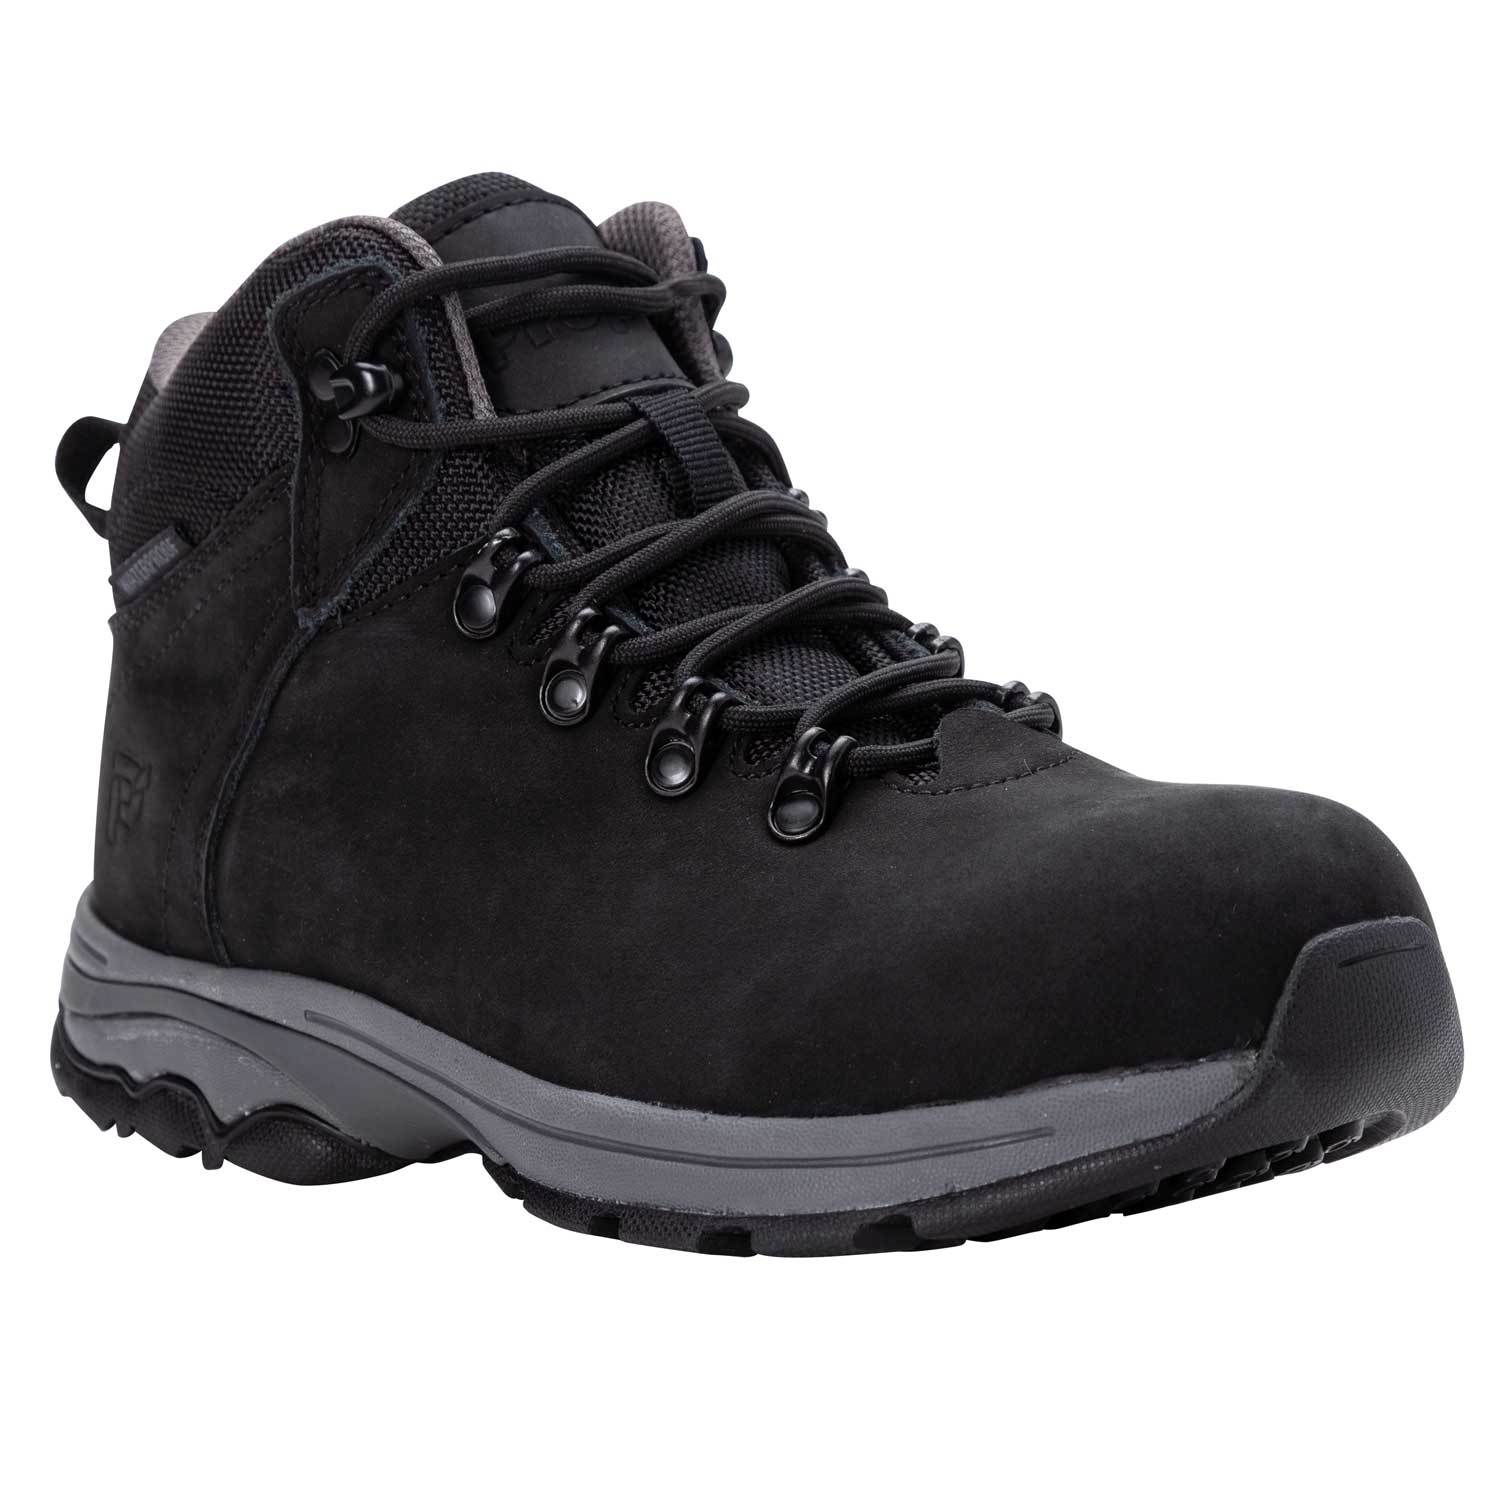 black waterproof hiking boots